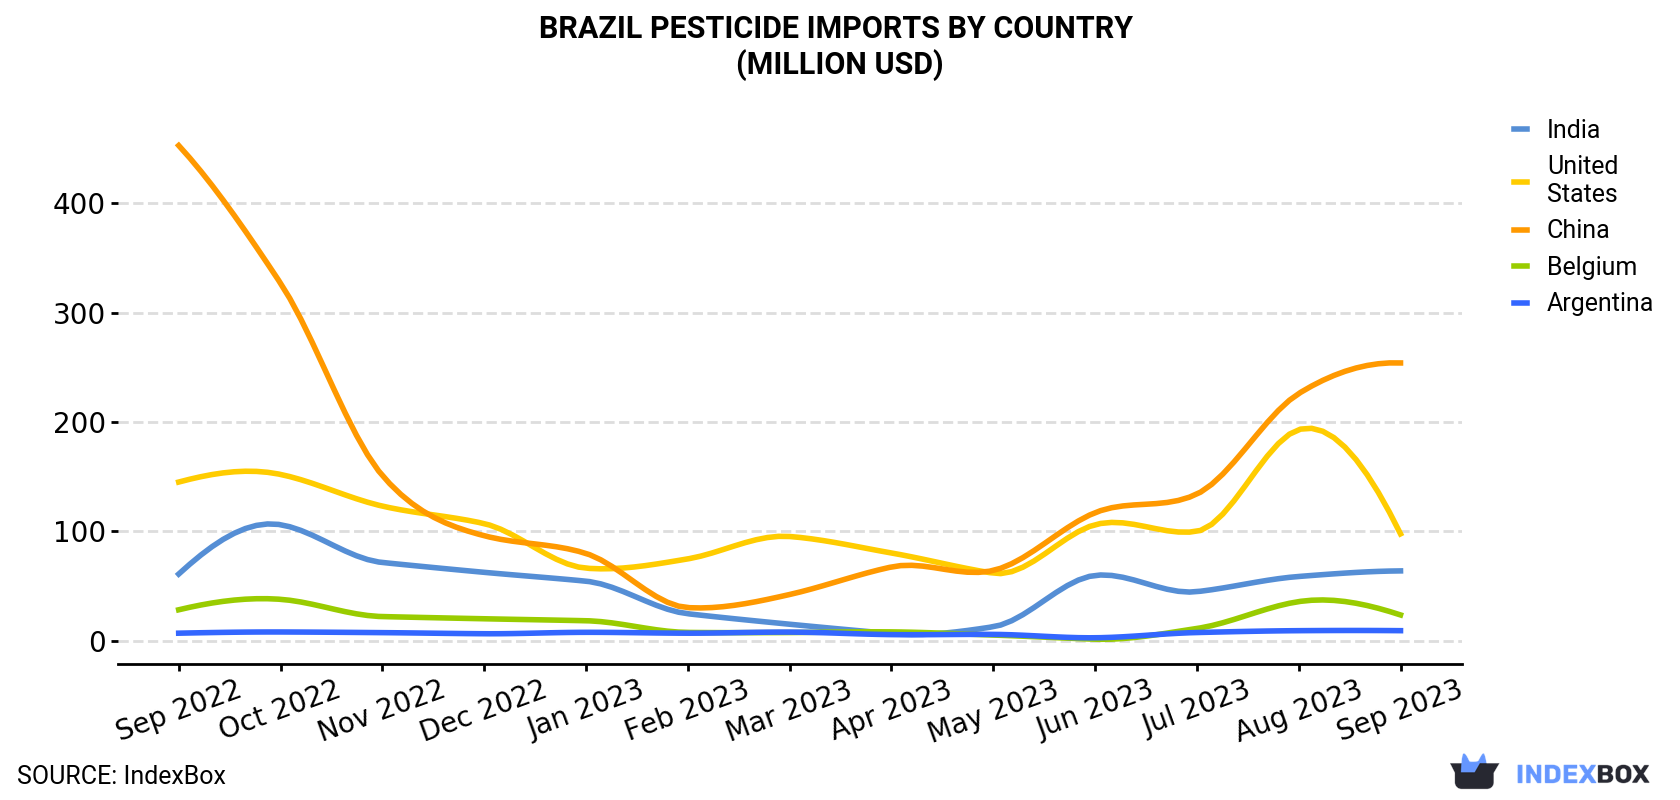 Brazil Pesticide Imports By Country (Million USD)